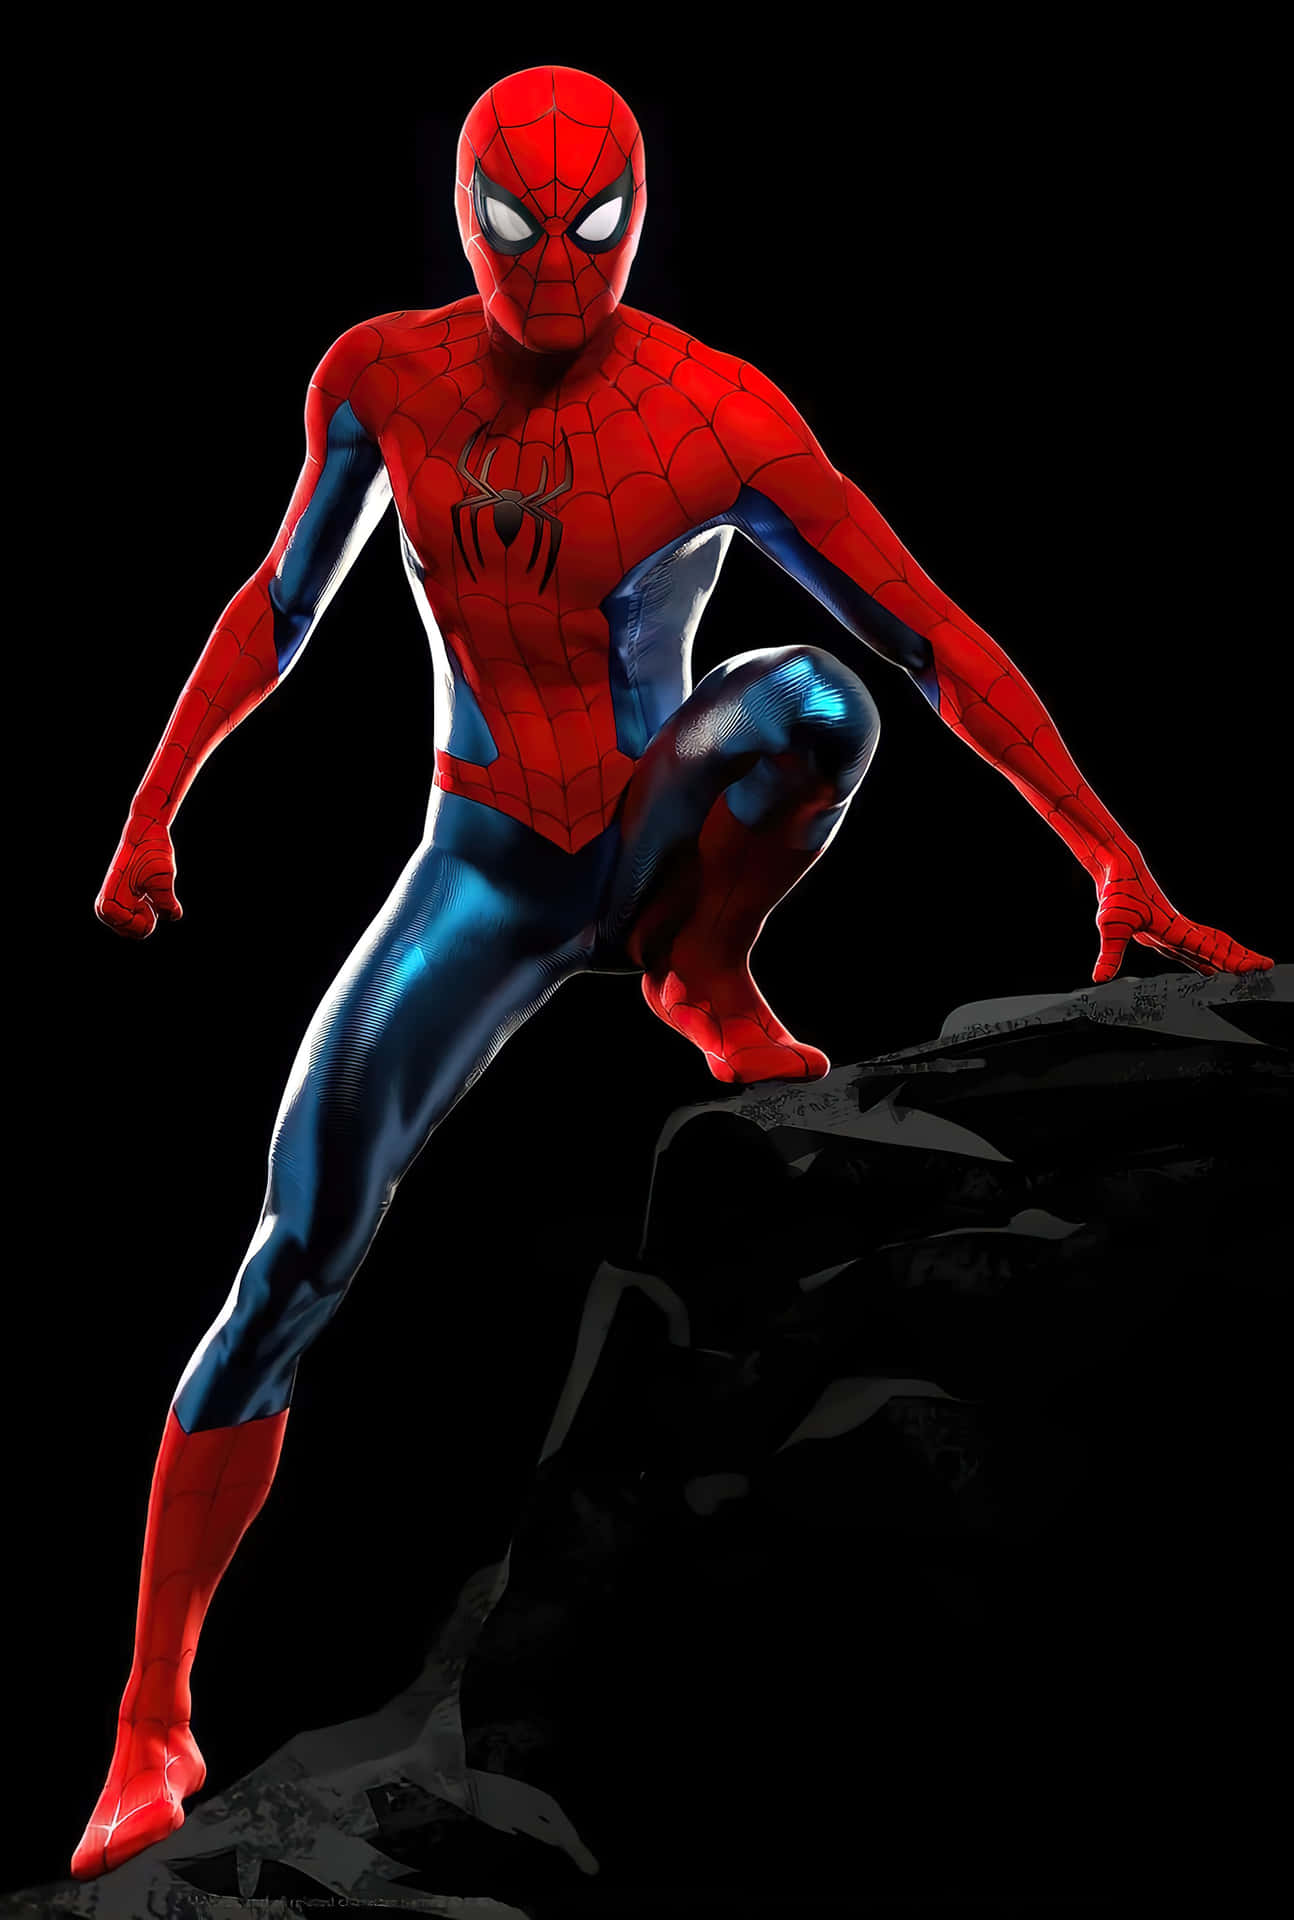 Spiderman Pose by B-3903 on DeviantArt